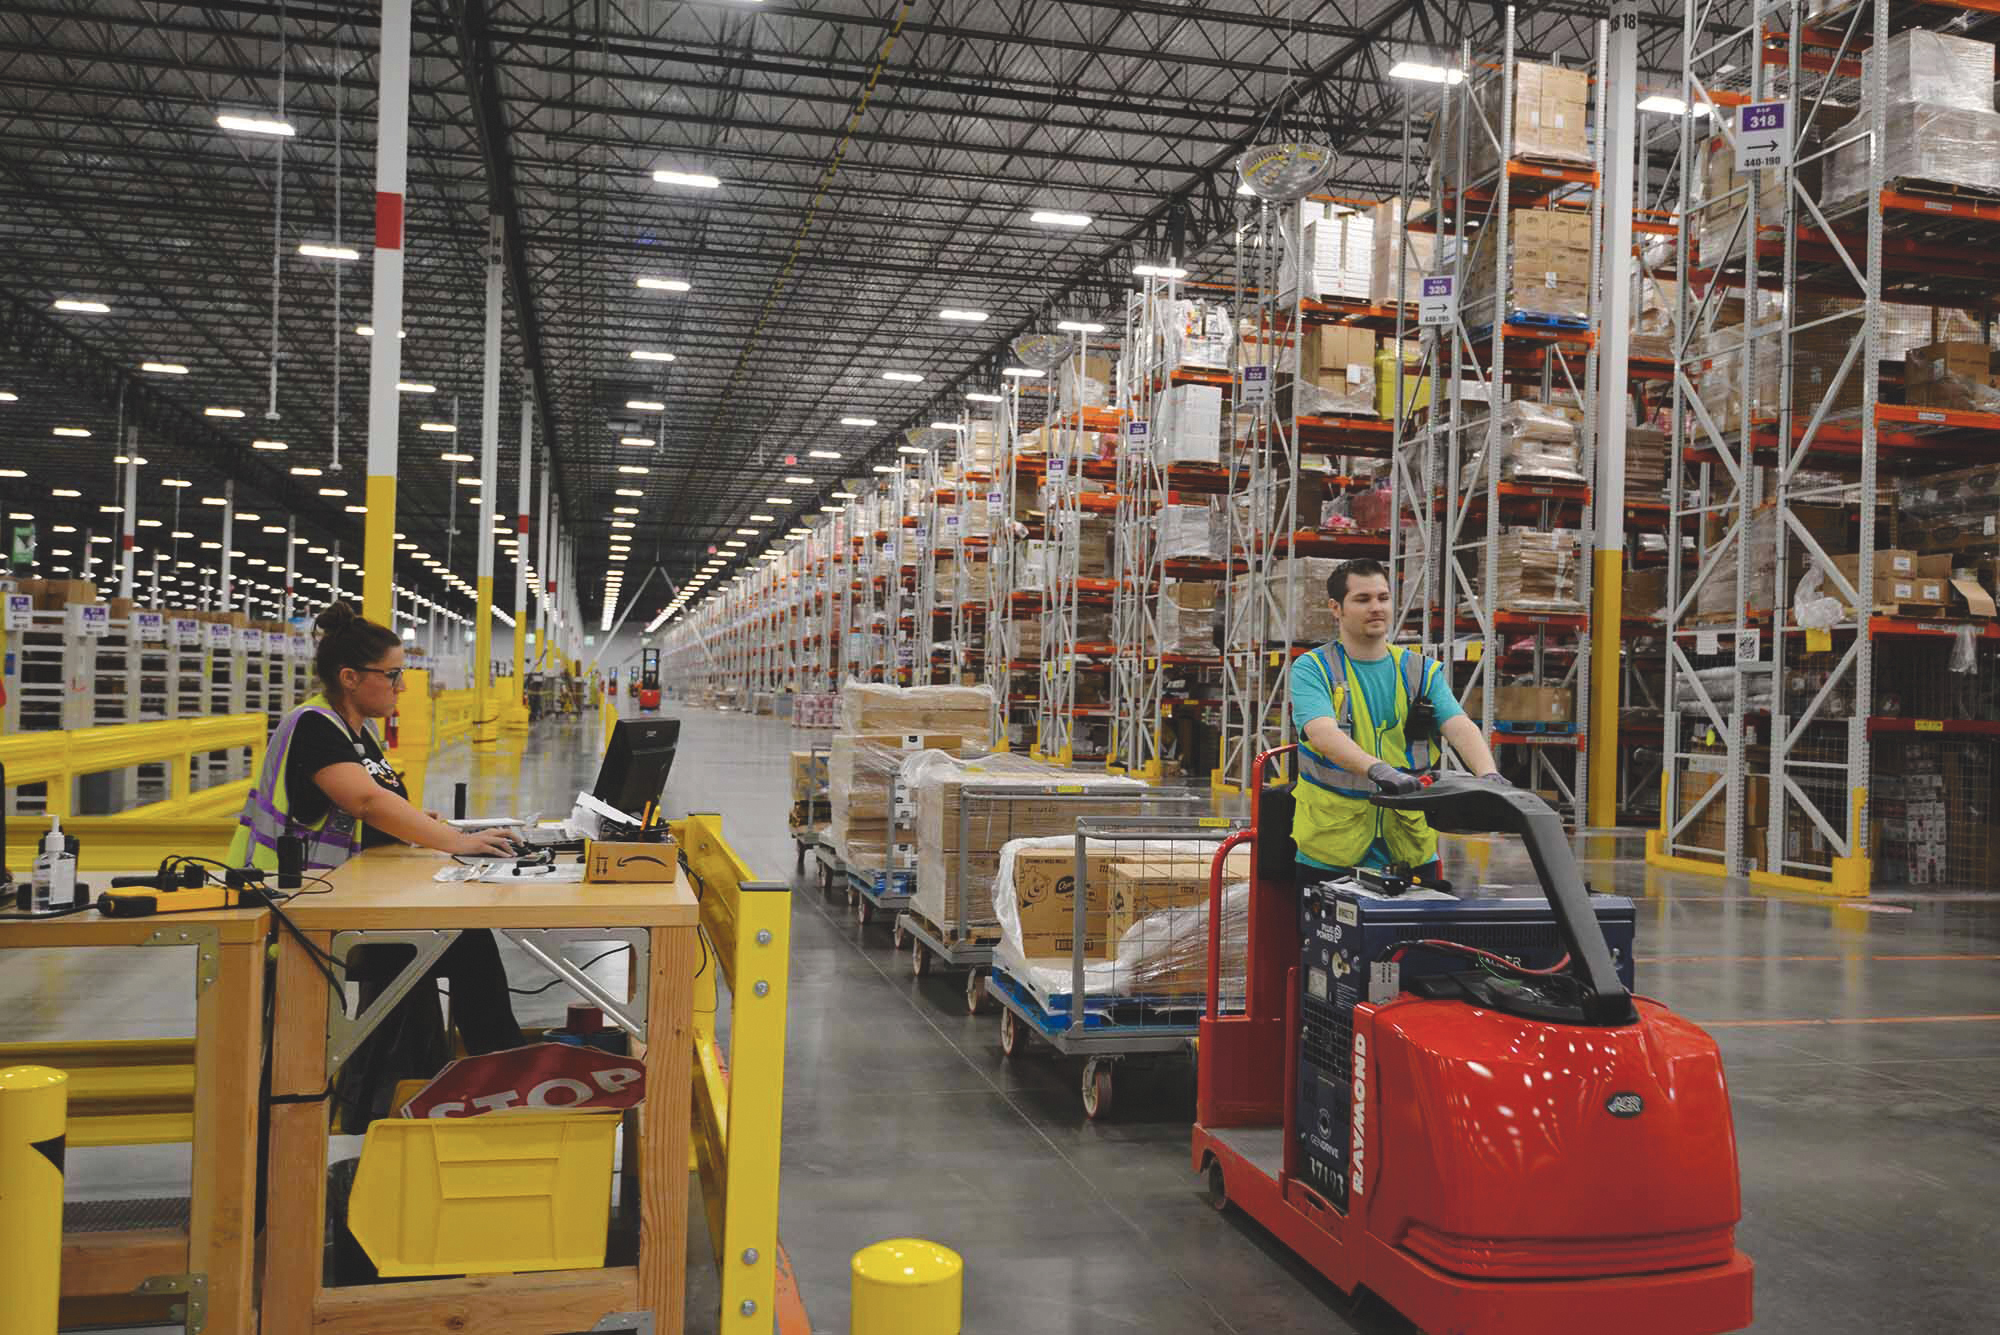 Inside an Amazon distribution center.